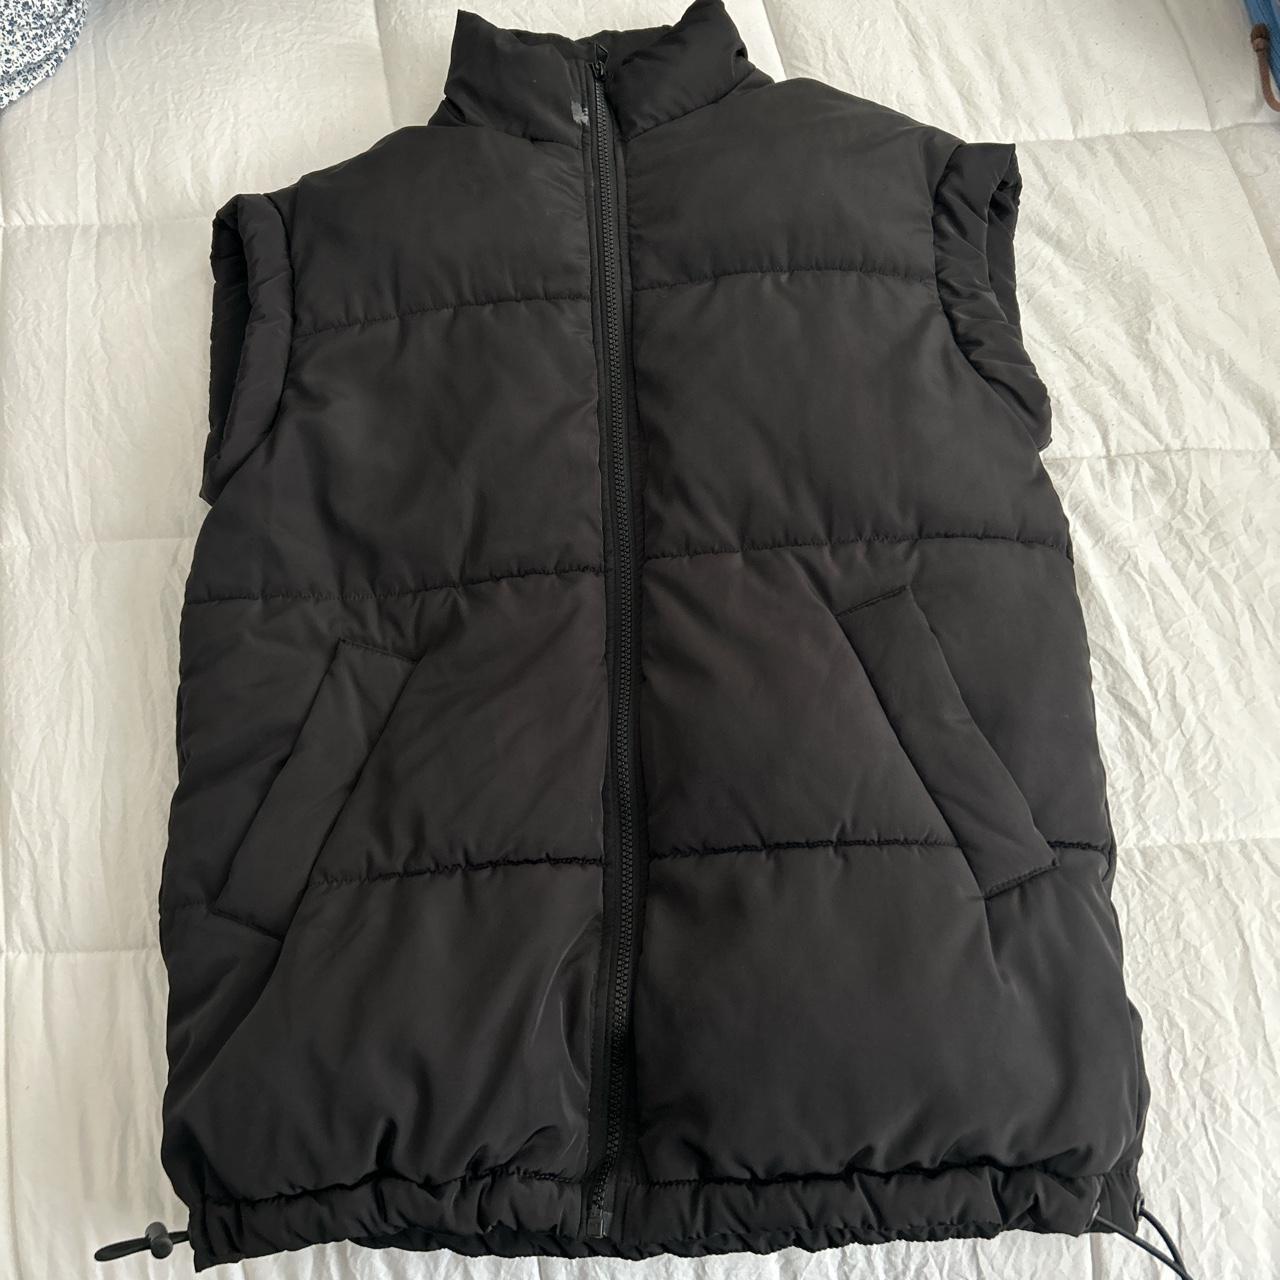 h&m long puffer vest adjustable at the waist - Depop